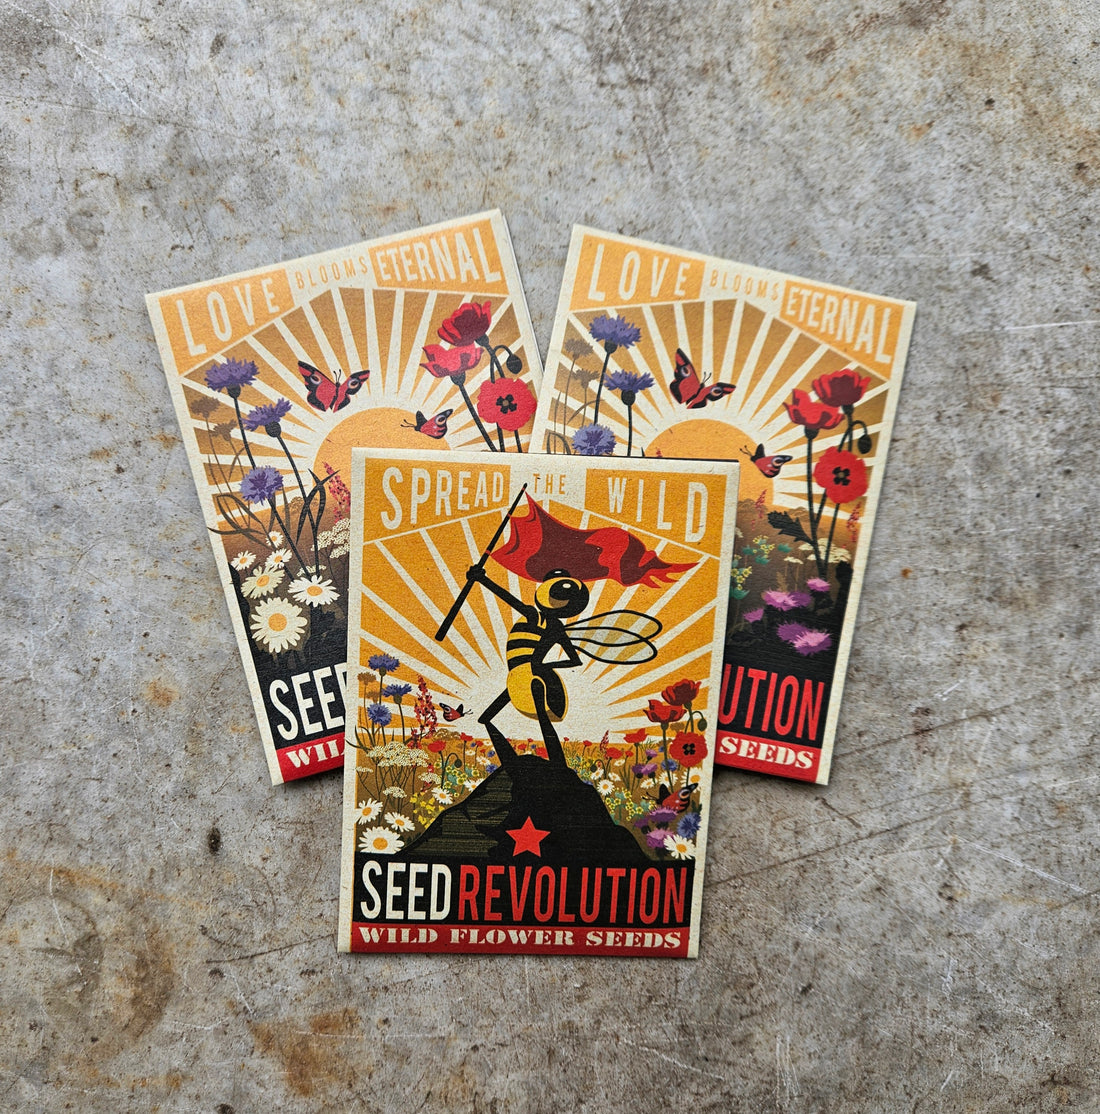 Seed Revolution seeds